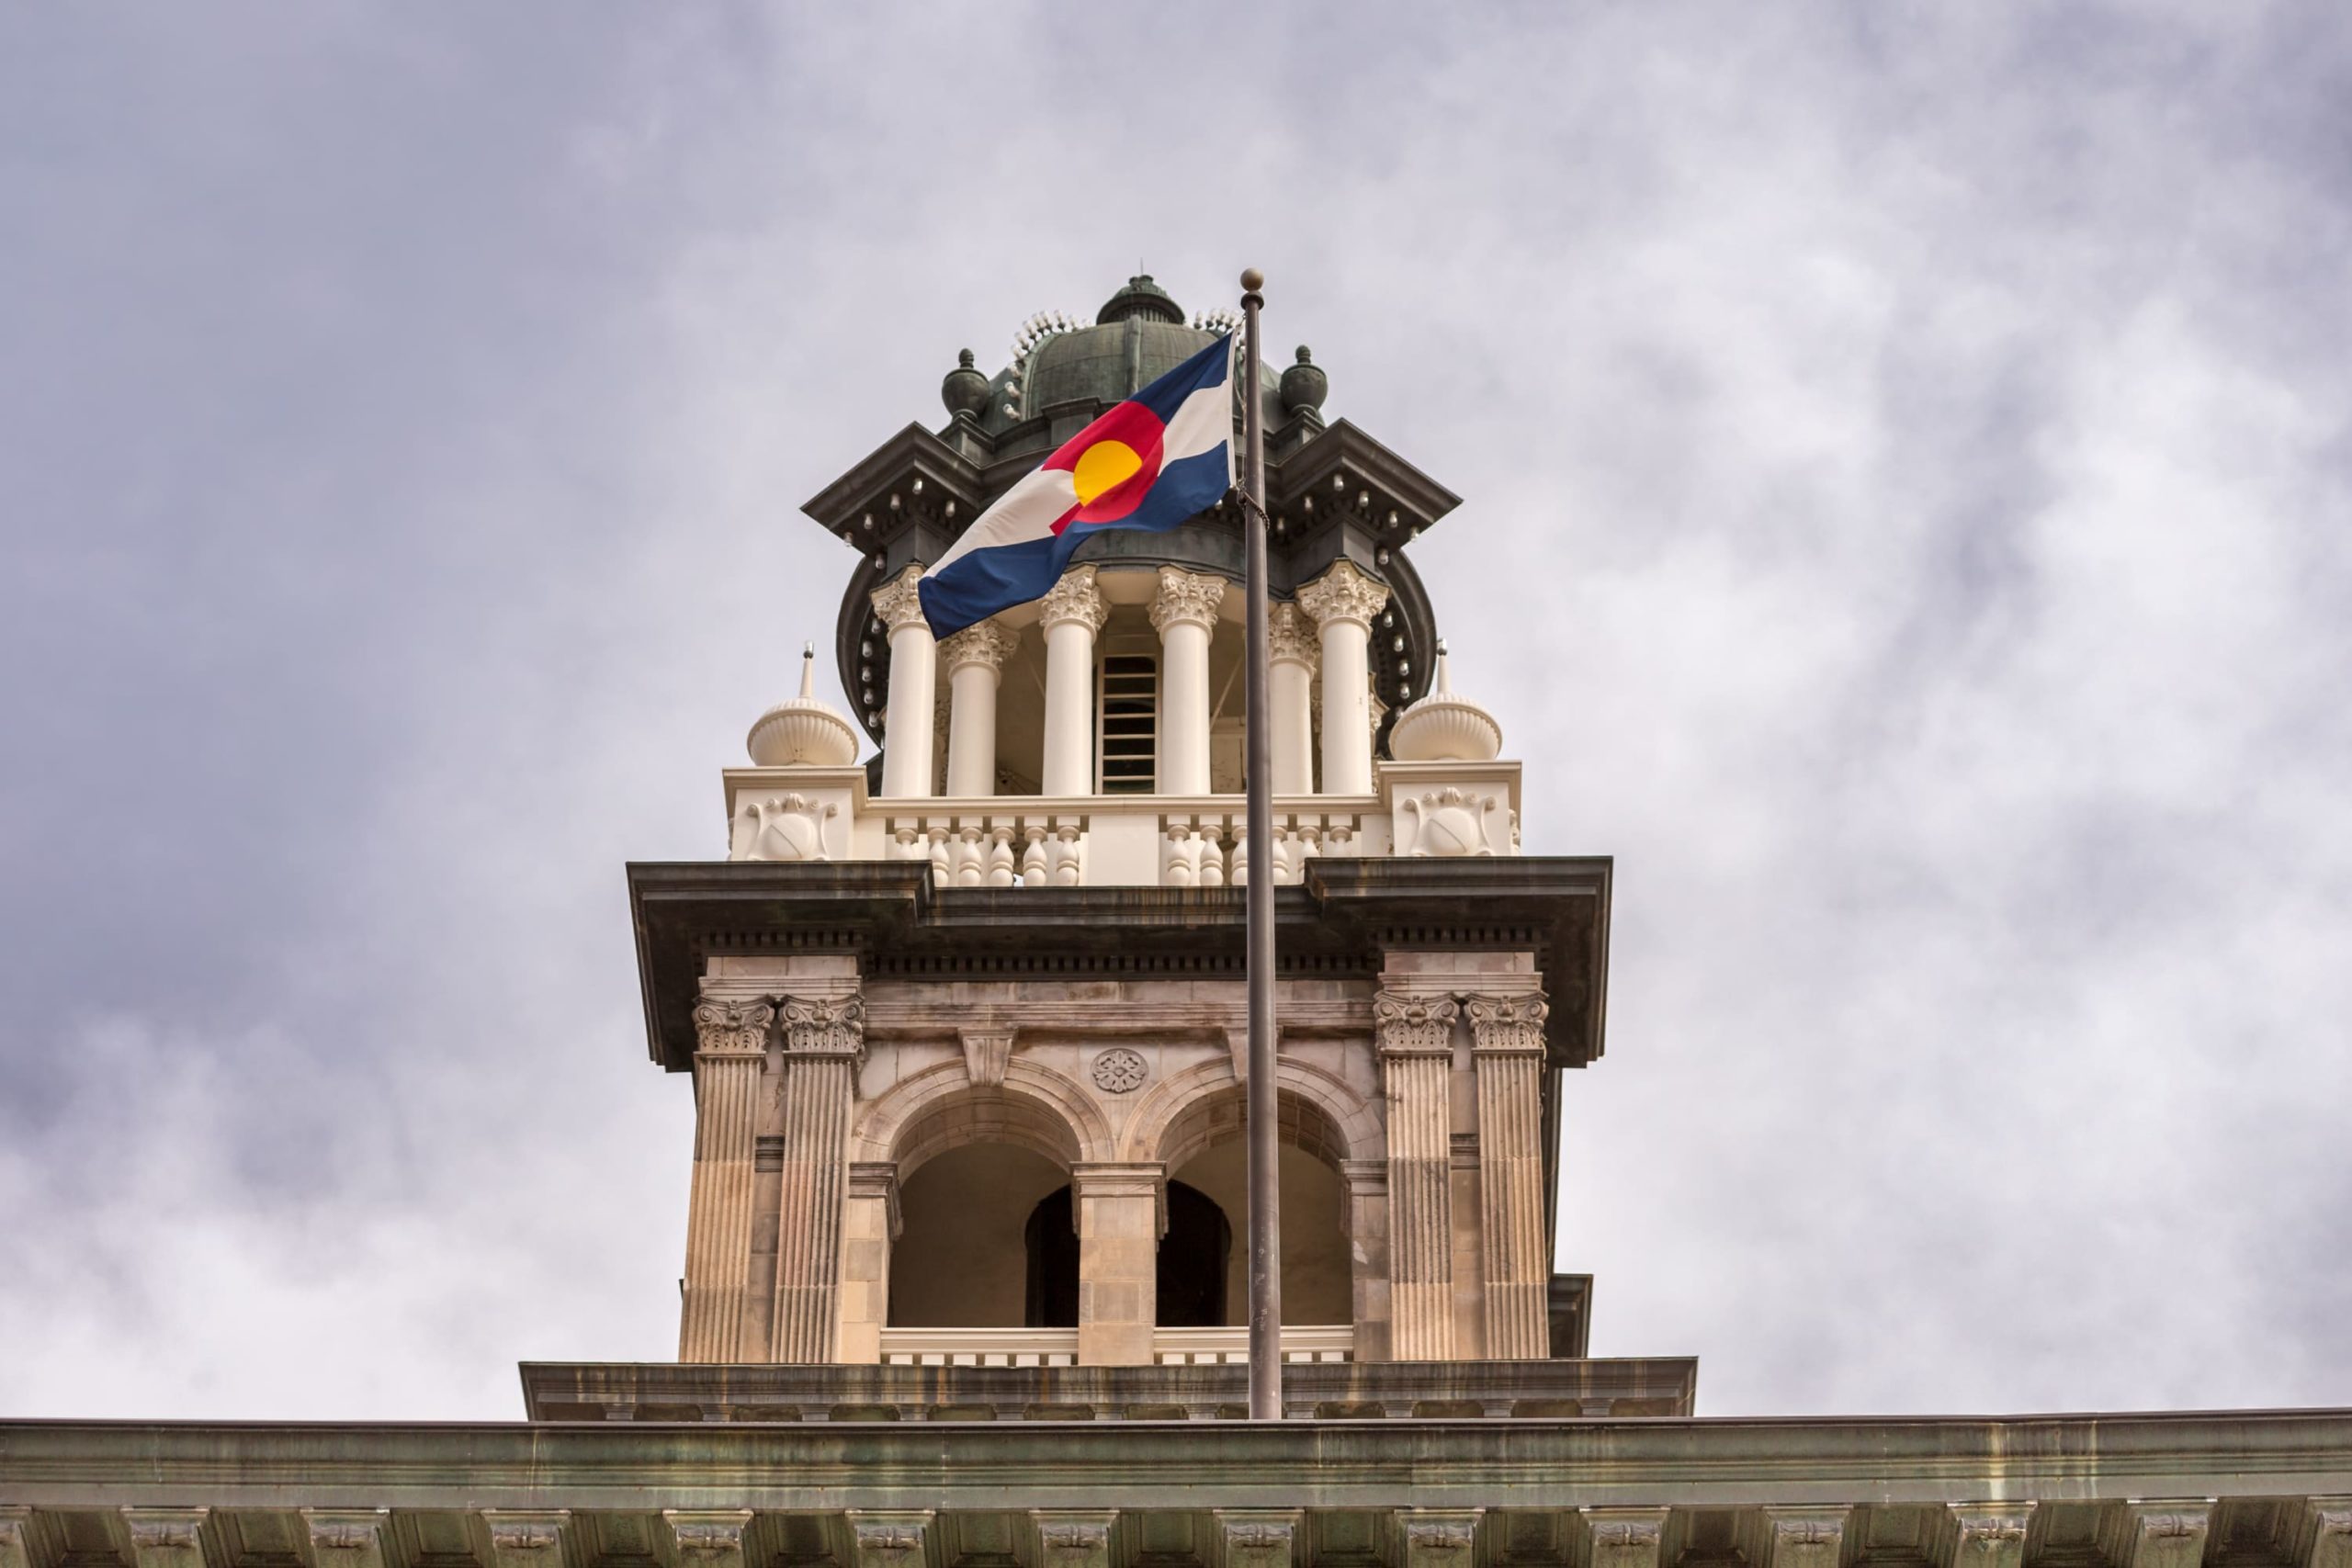 Colorado flag flies in front of a building.